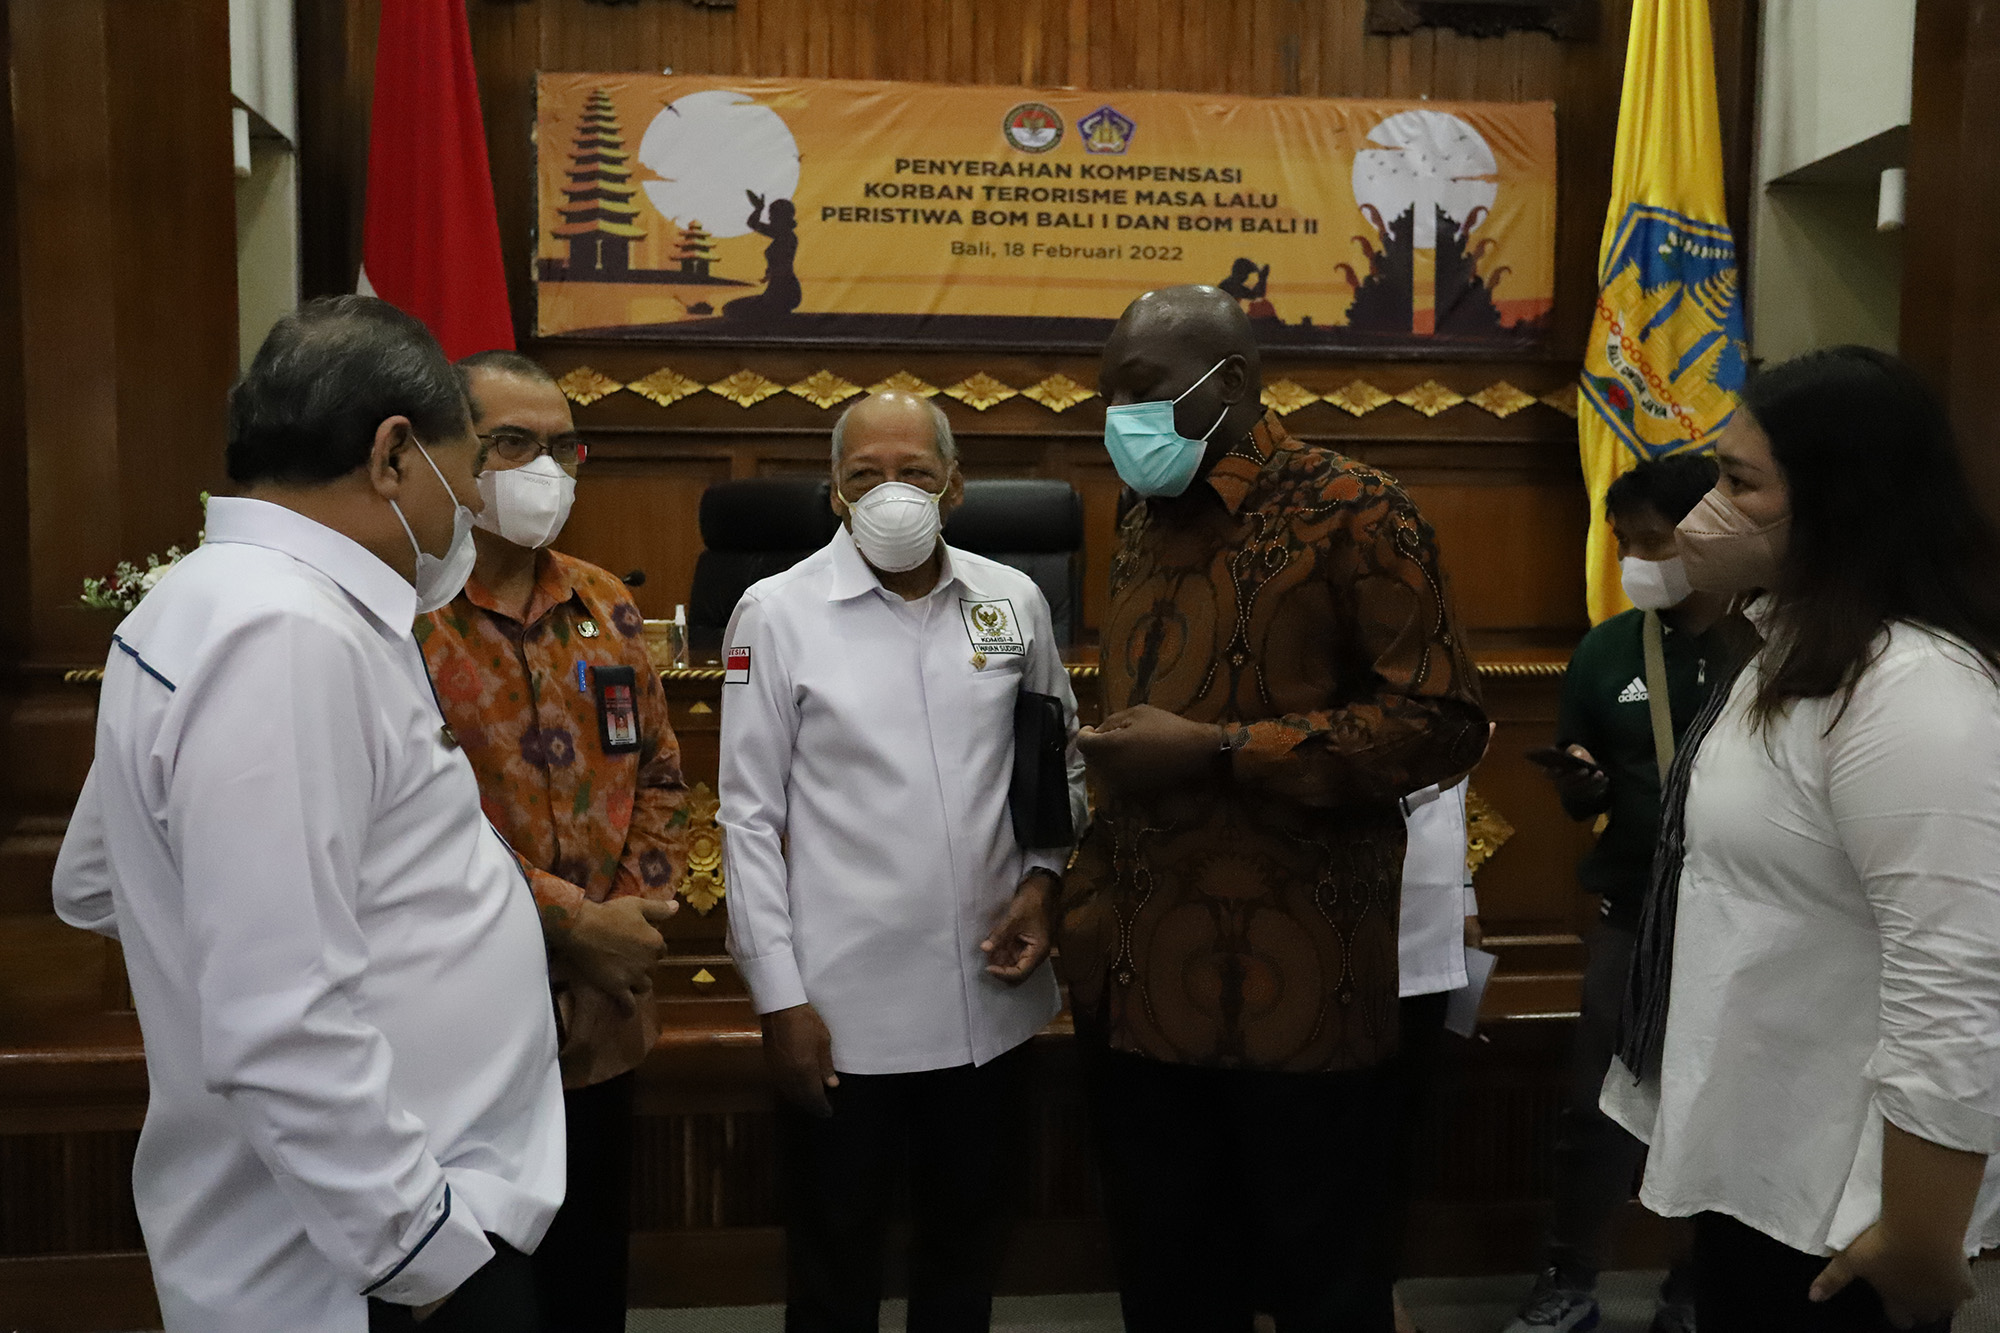 Compensation of handover ceremony to survivors of terrorism in Bali